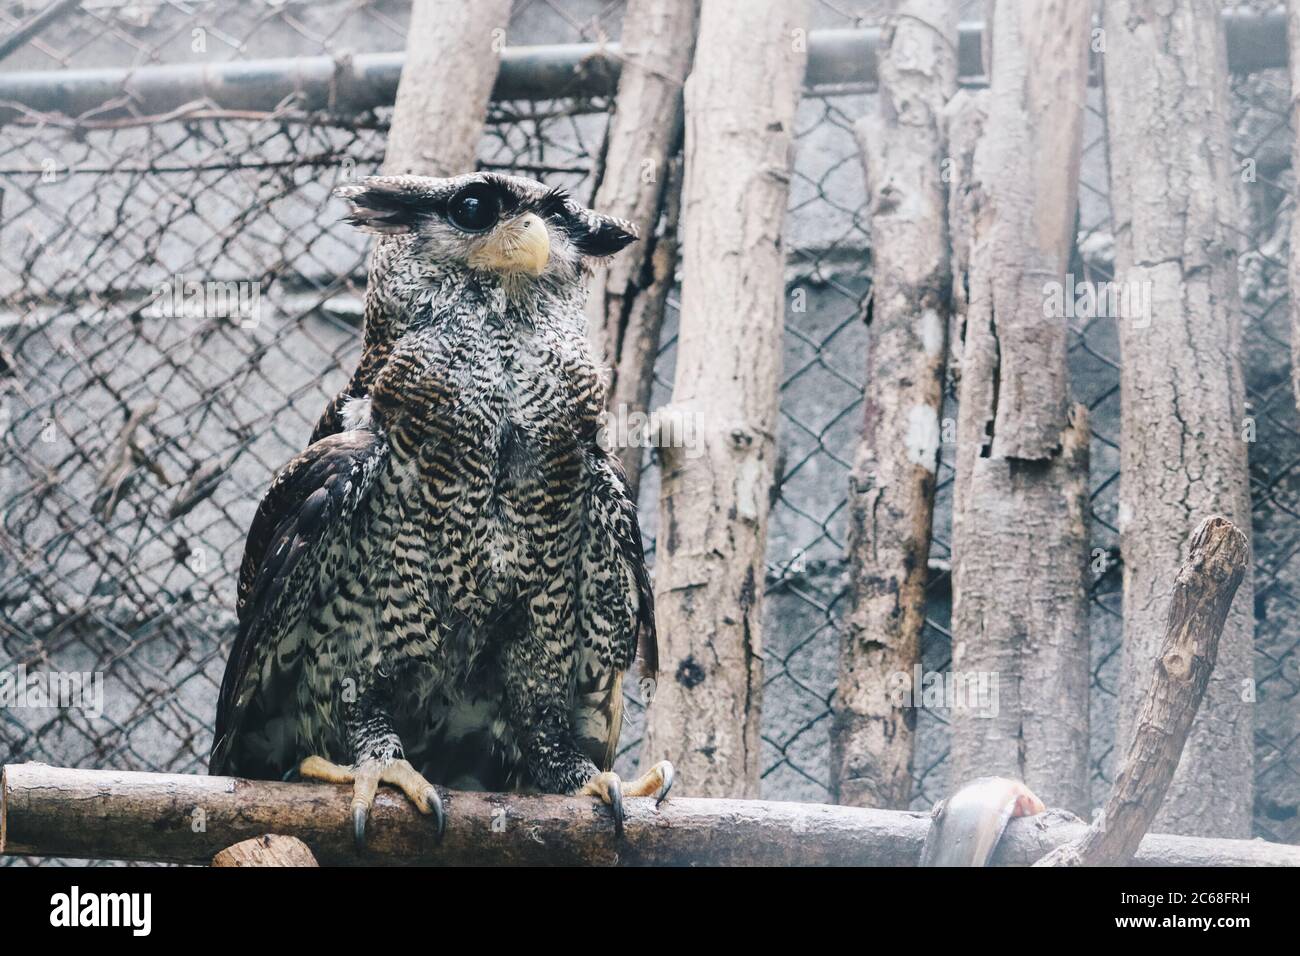 The barred eagle-owl (Bubo sumatranus), also called Beluk jampuk or Malay eagle-owl on the branch Stock Photo